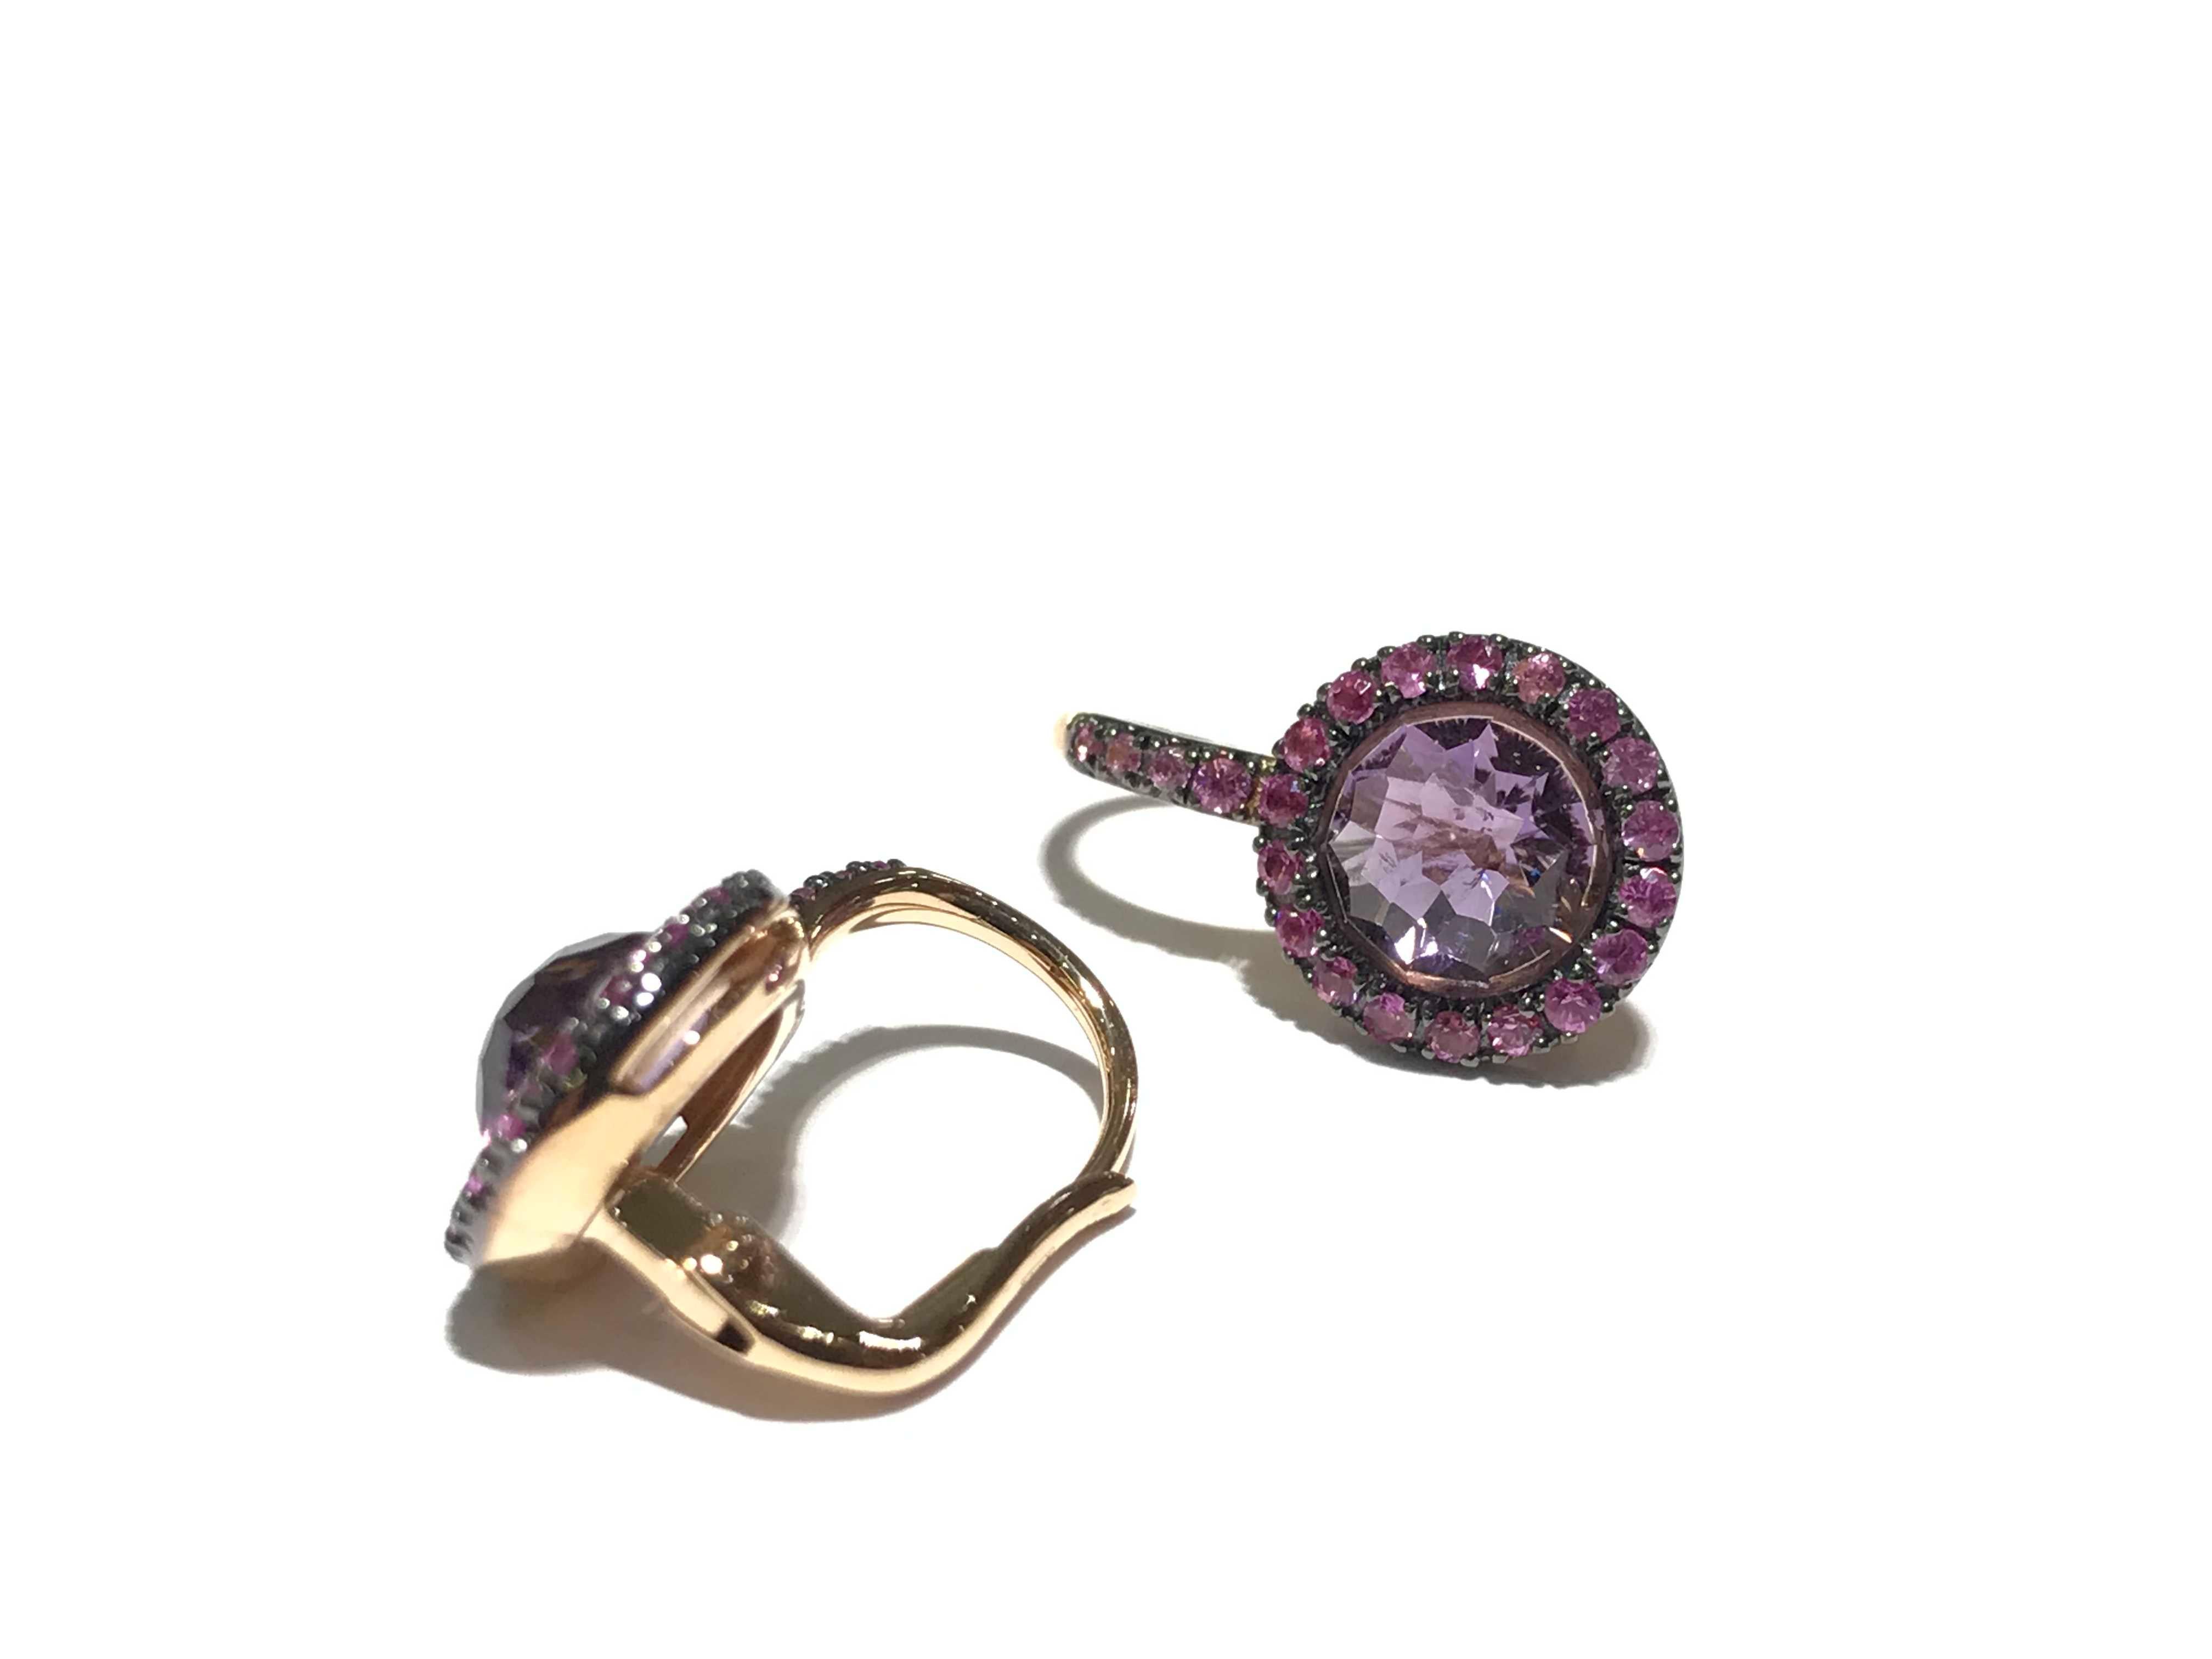 Mimi italian made drop earrings in pink sapphires and purple amethyst stones 
set in 18 karat pink gold 
